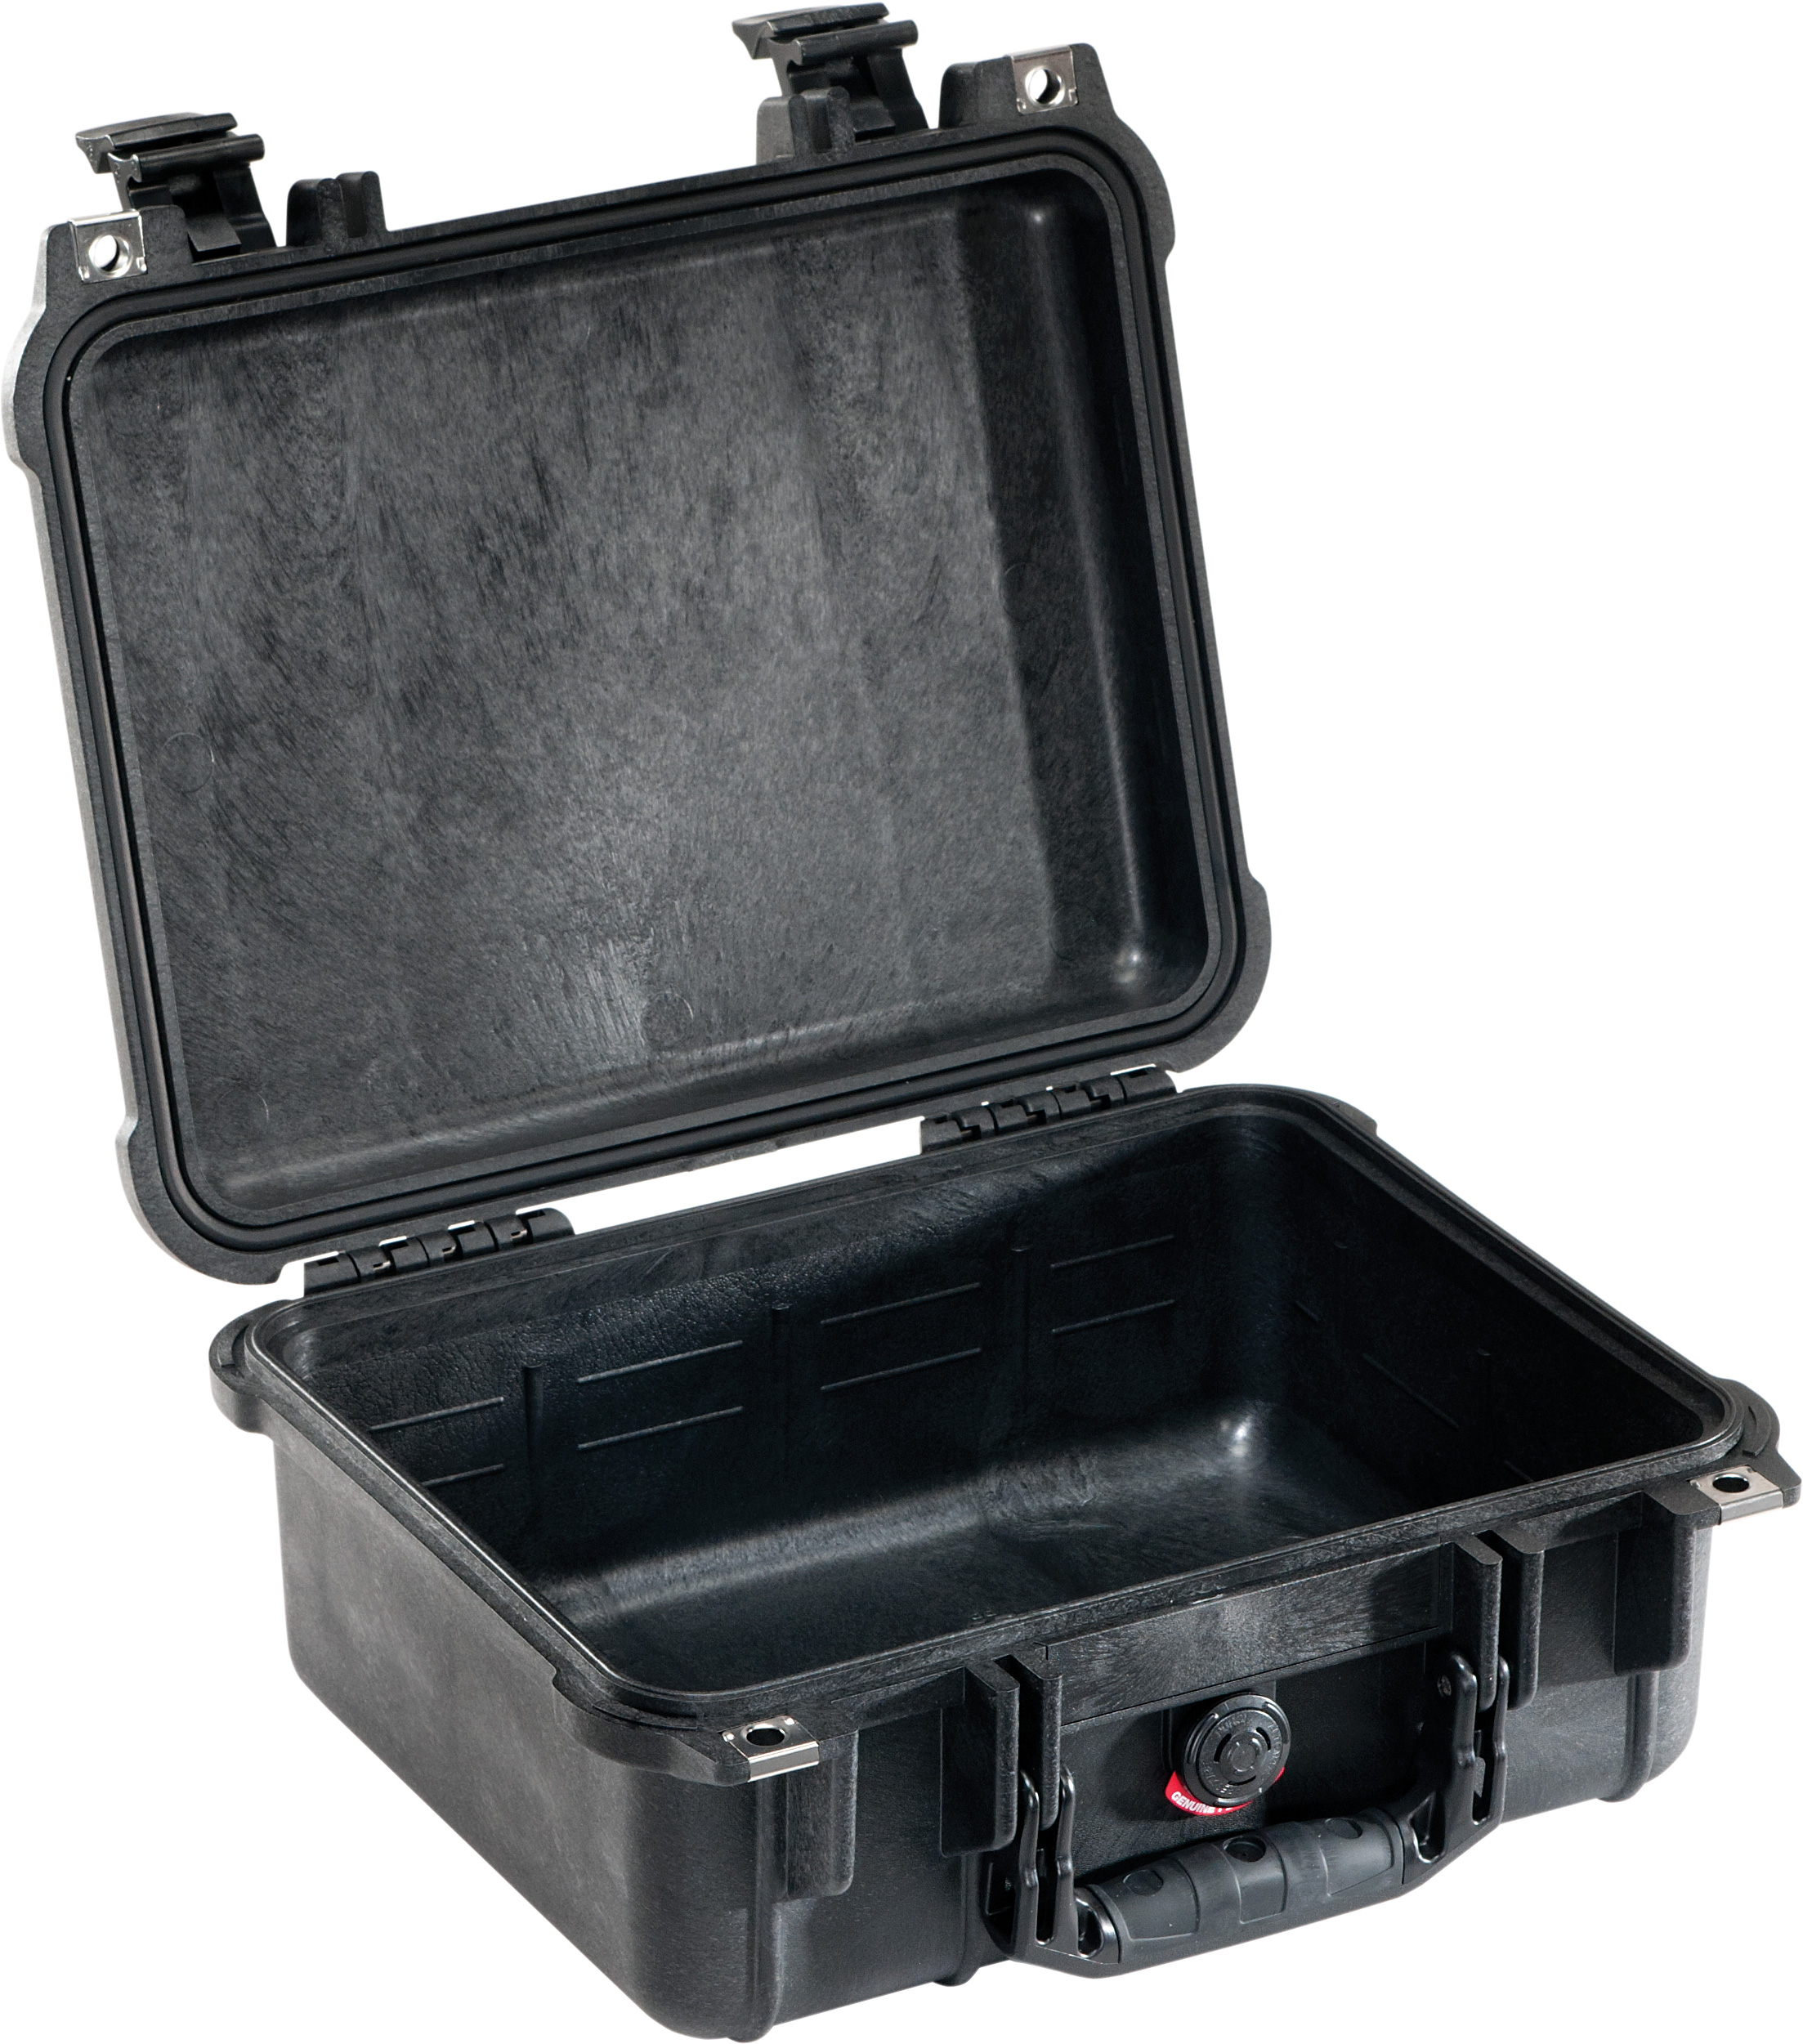 New Boxed Peli Storm im2200 Protective Waterproof Plastic Case Free P+P 